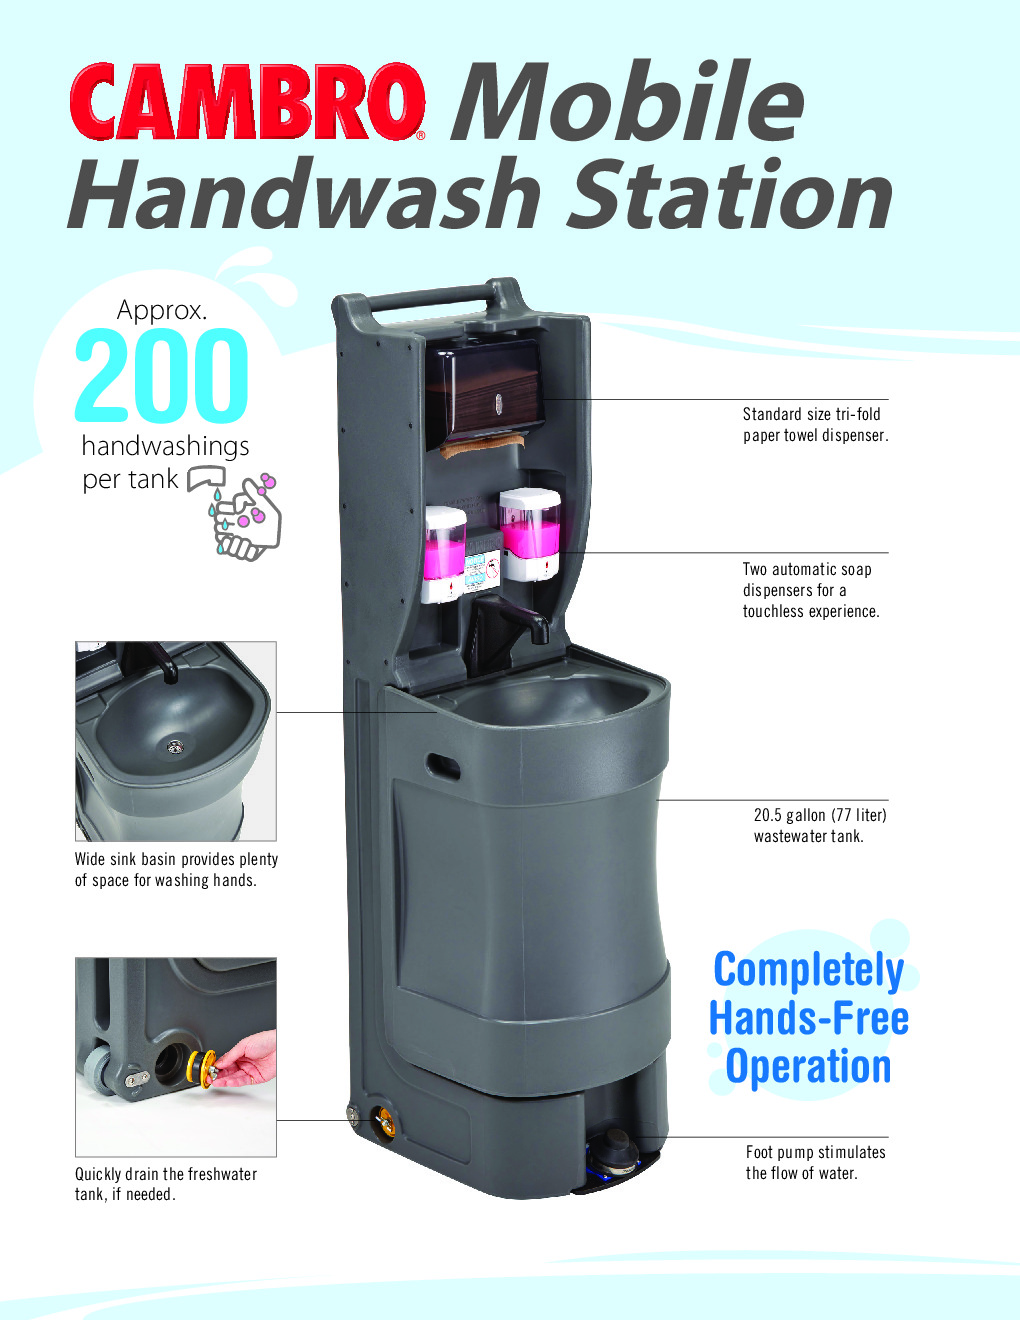 Cambro MHWS18PER100 Handwashing System